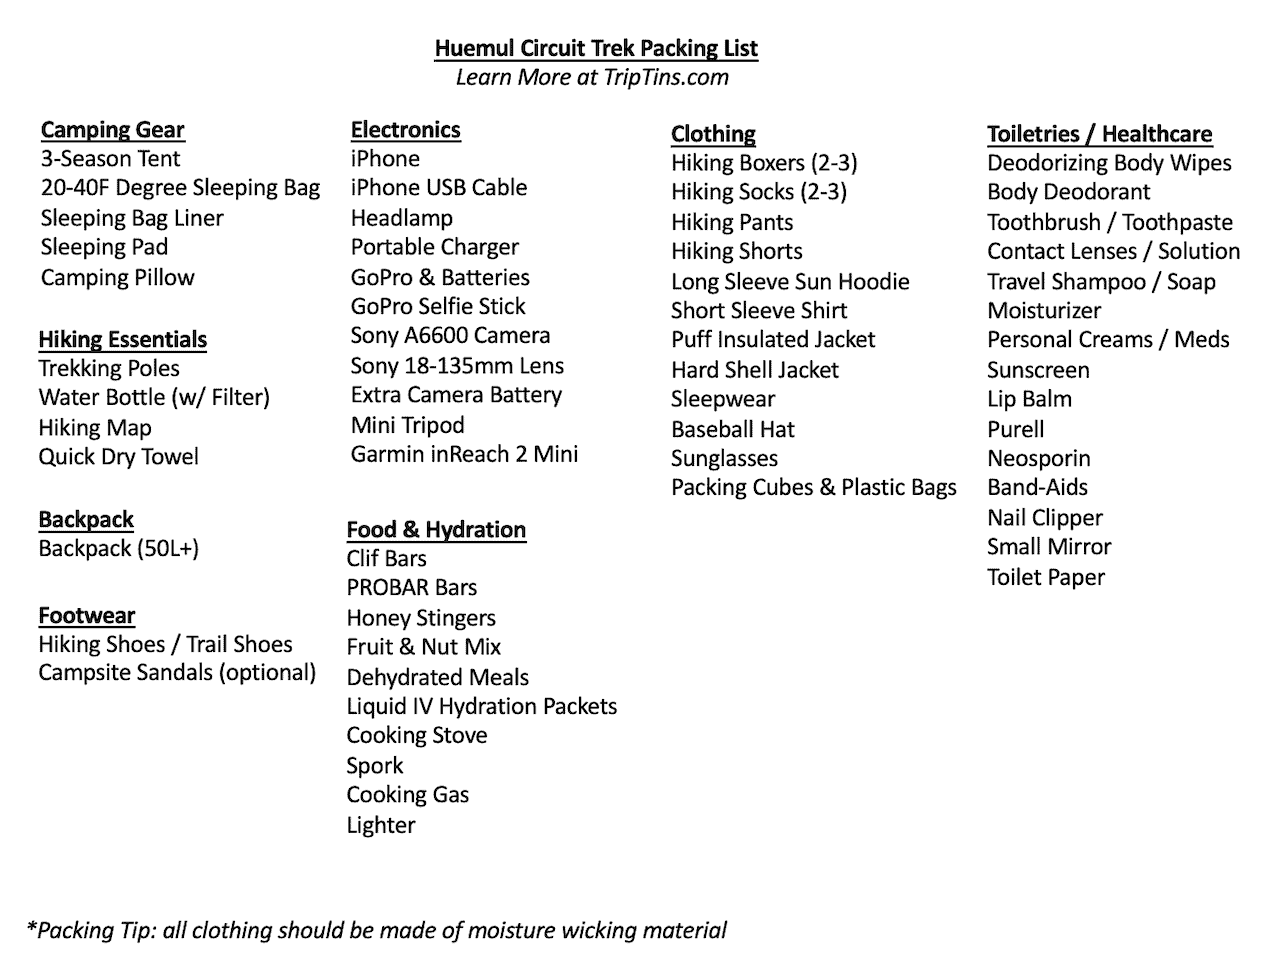 Huemul Circuit Packing List